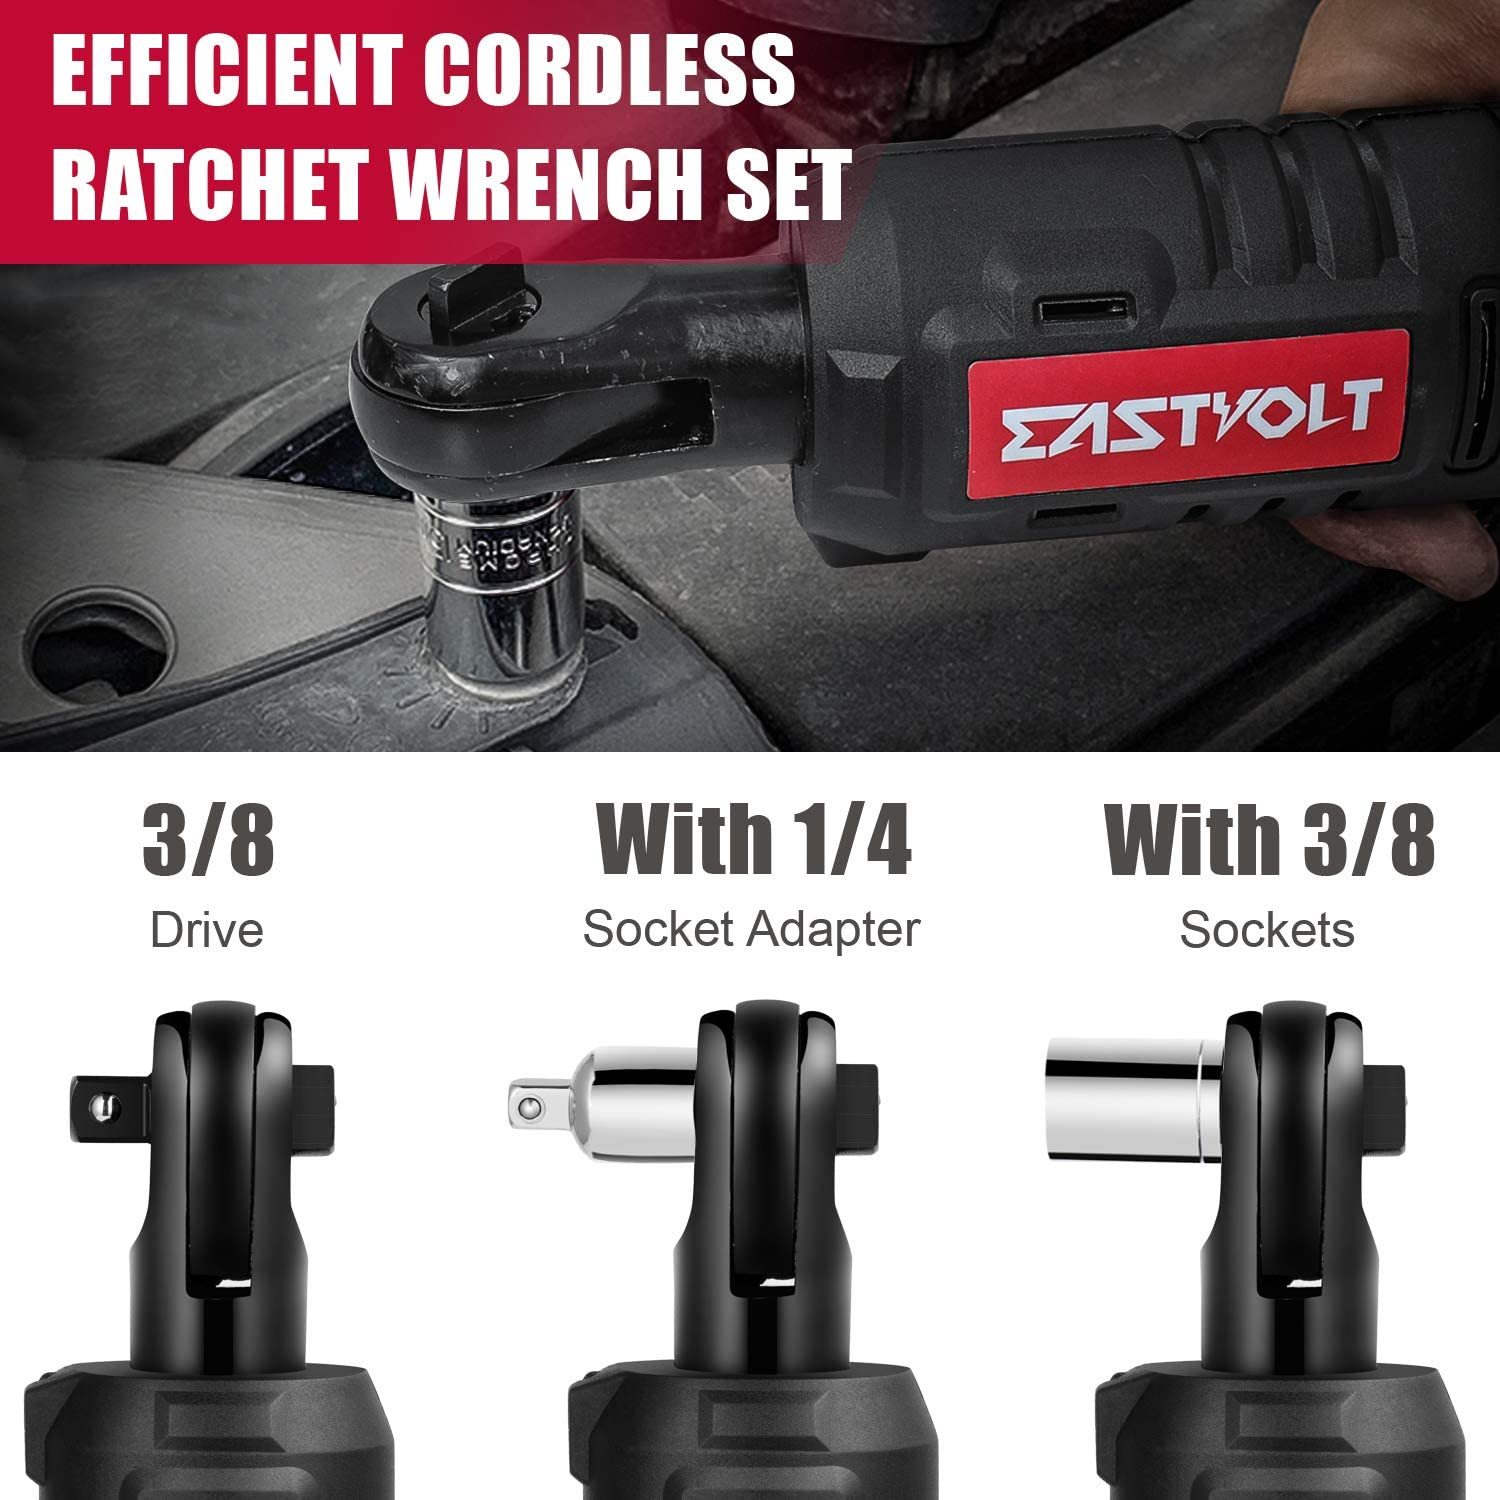 Eastvolt 12V Cordless Electric Ratchet and similar items